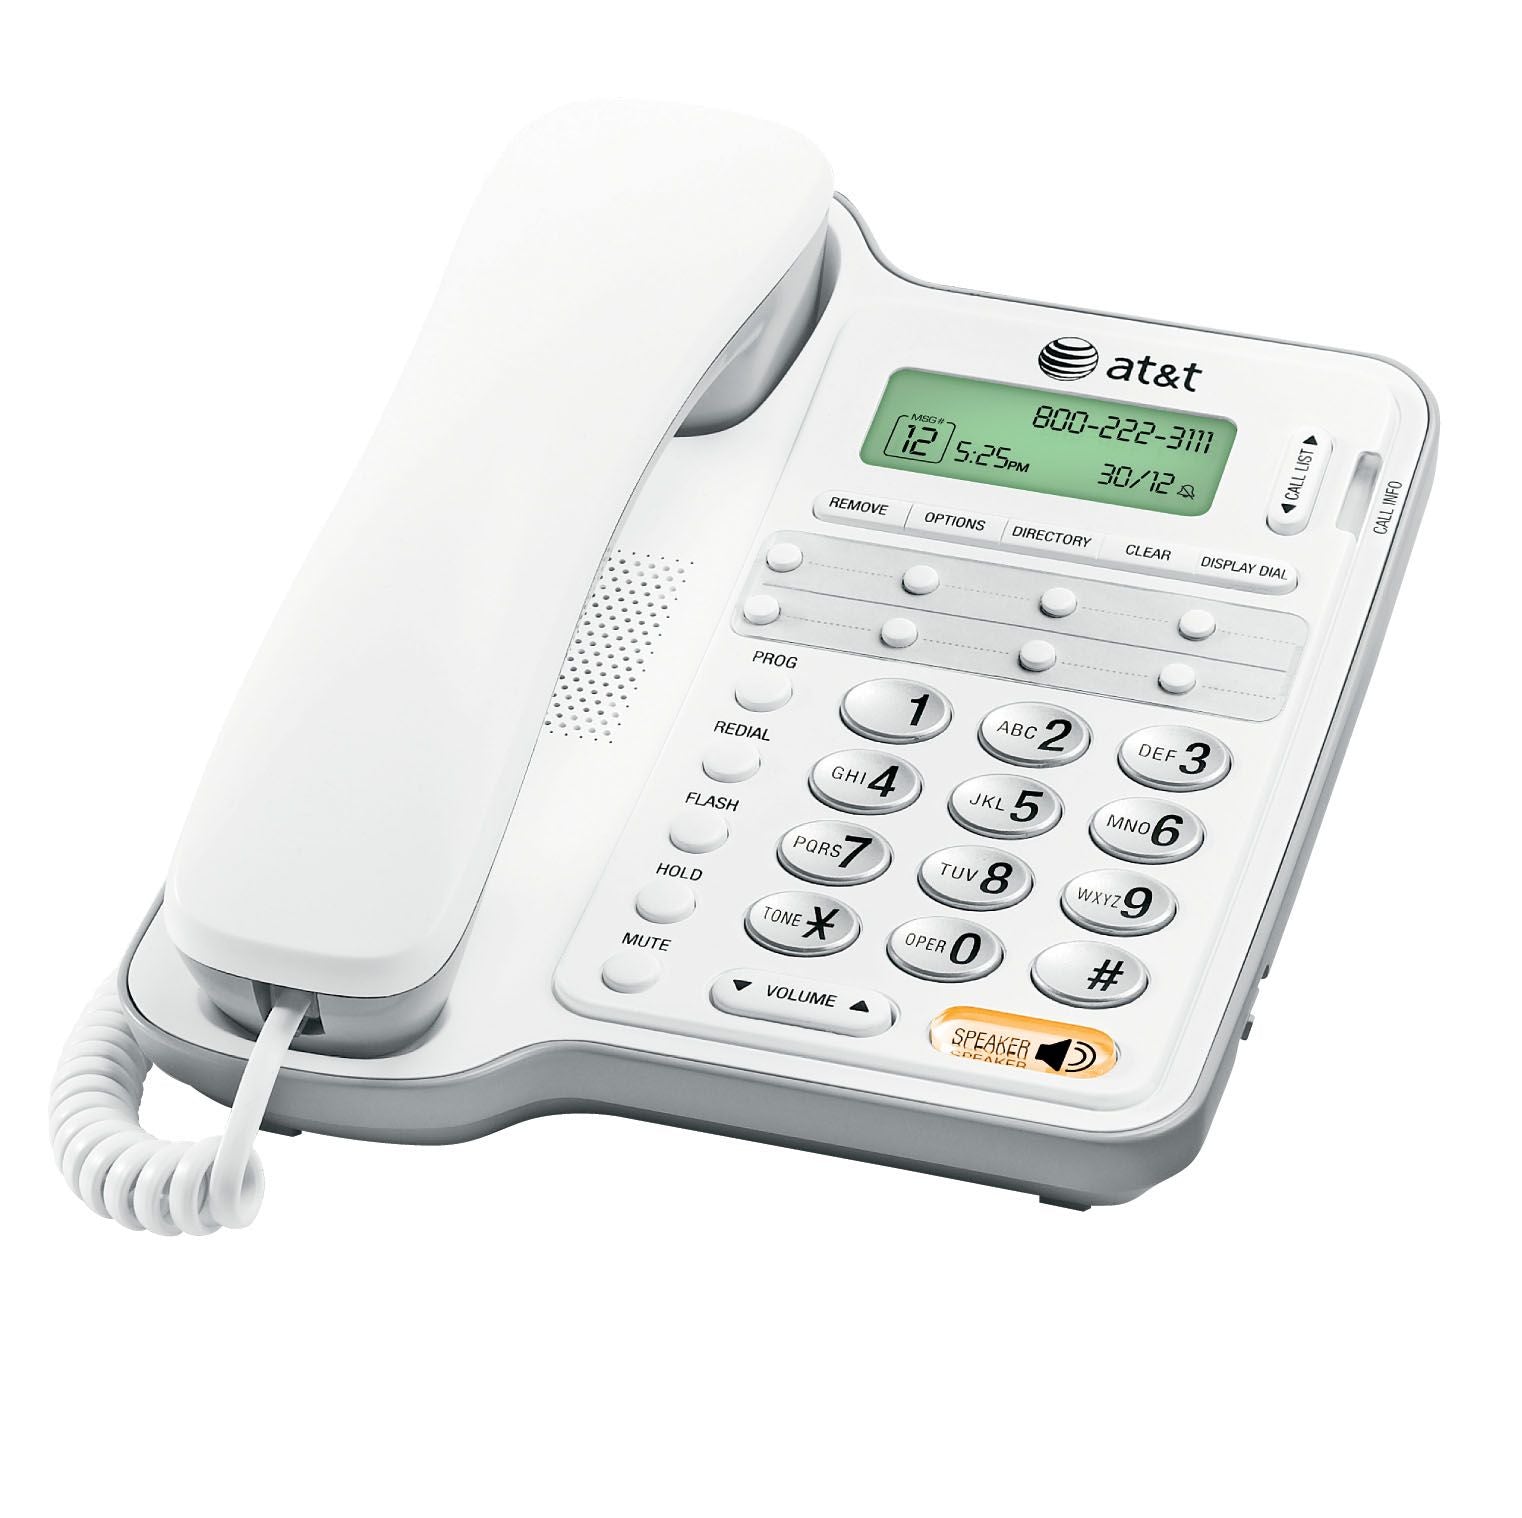 AT&T - CL2909 - Speakerphone with CID/CW ATT-CL2909 - The Telecom Spot